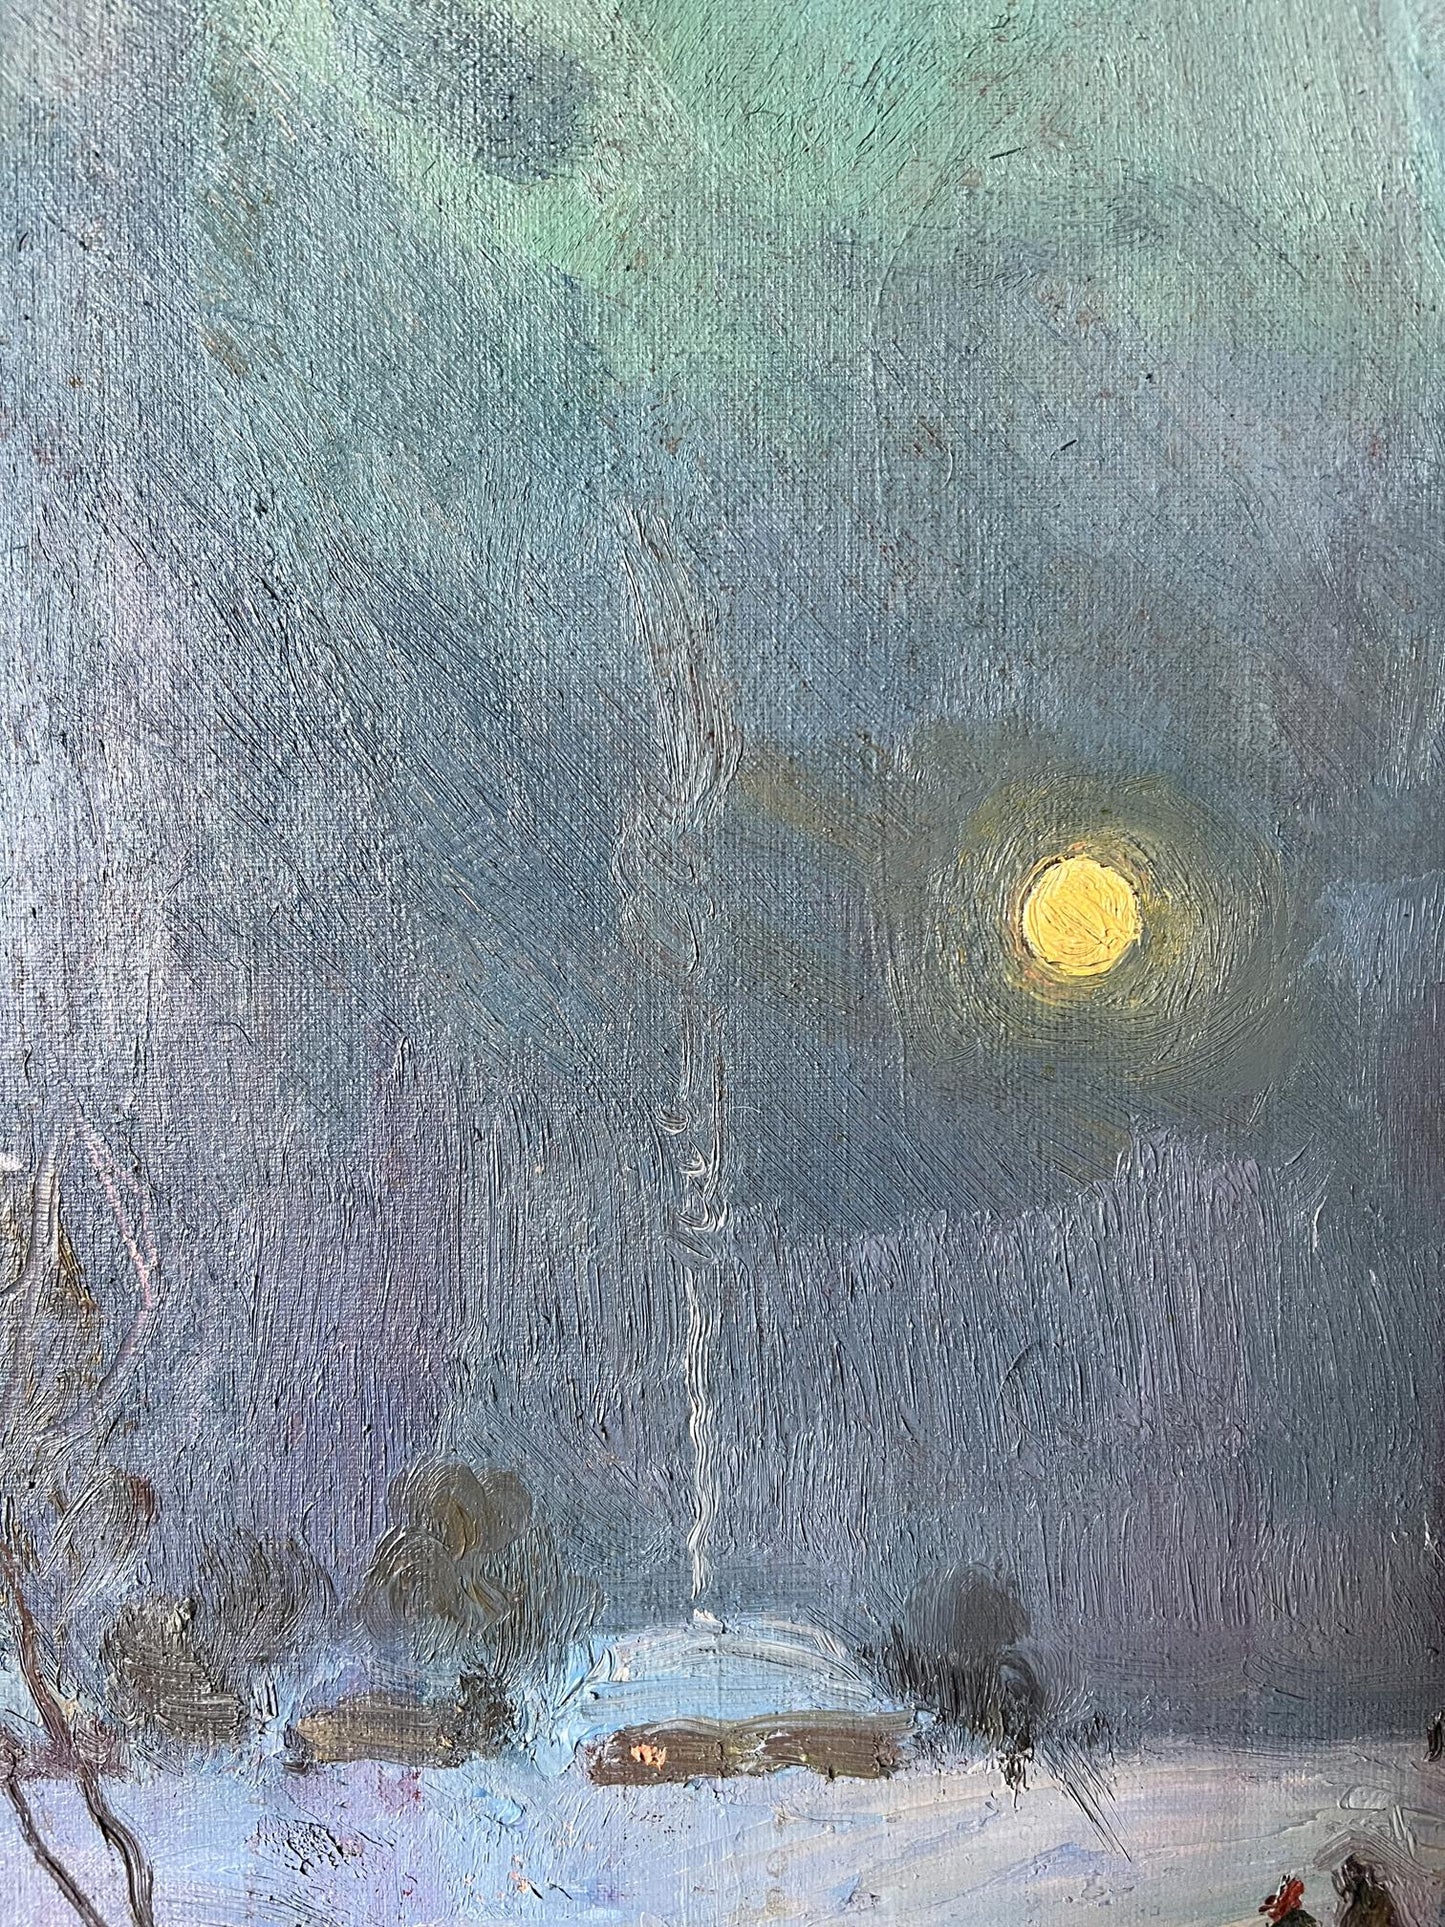 Oil painting Frosty morning V. Mishurovsky